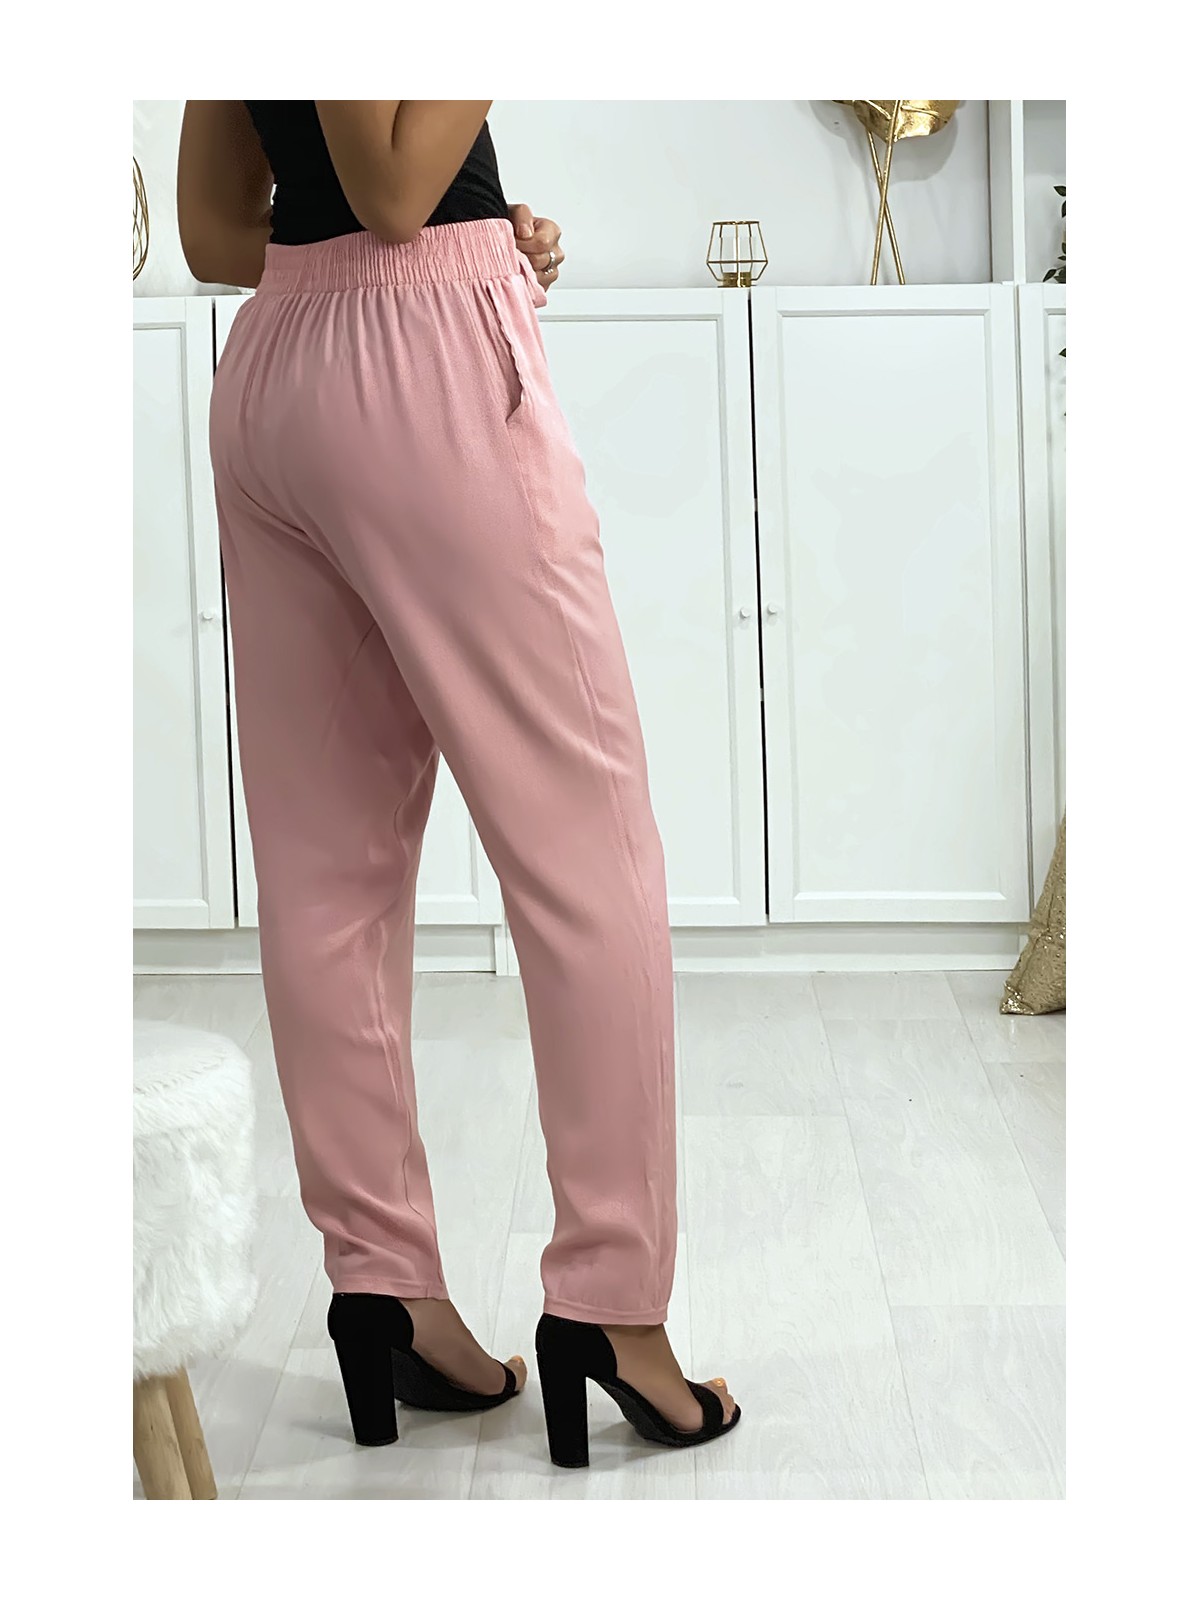 Pantalon rose en coton avec poches - 4